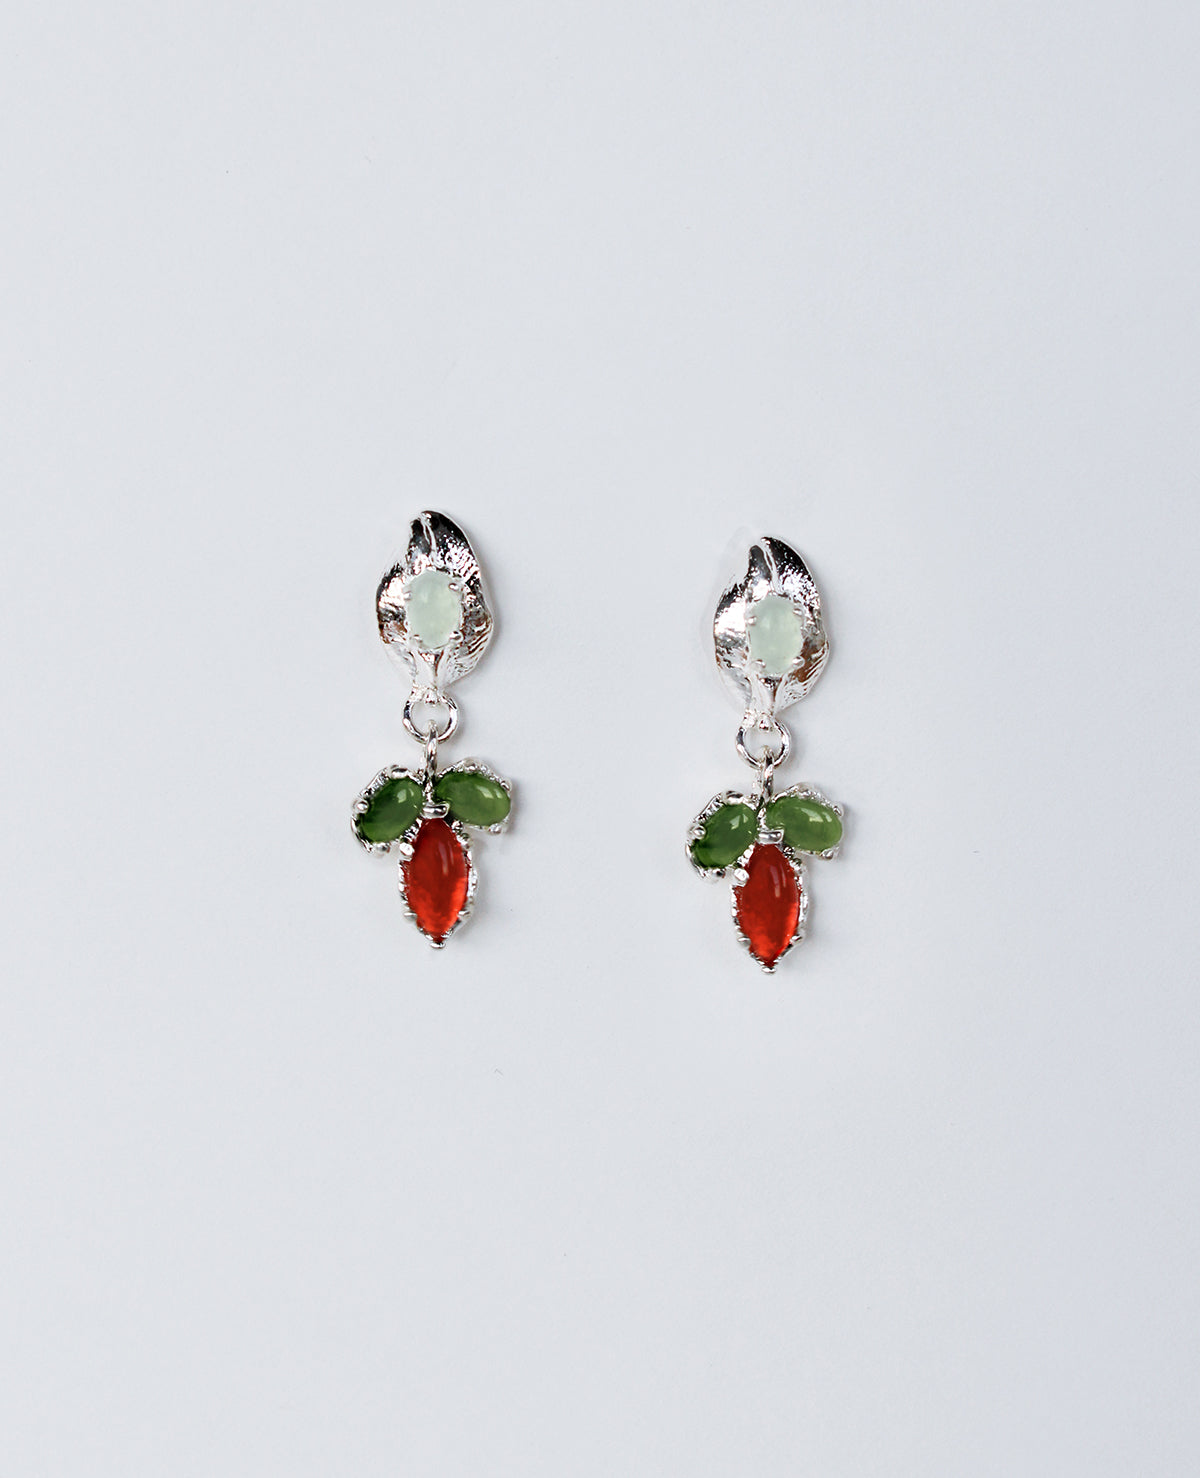 EAT MY BERRIES // summer earrings - ORA-C jewelry - handmade jewelry by Montreal based independent designer Caroline Pham